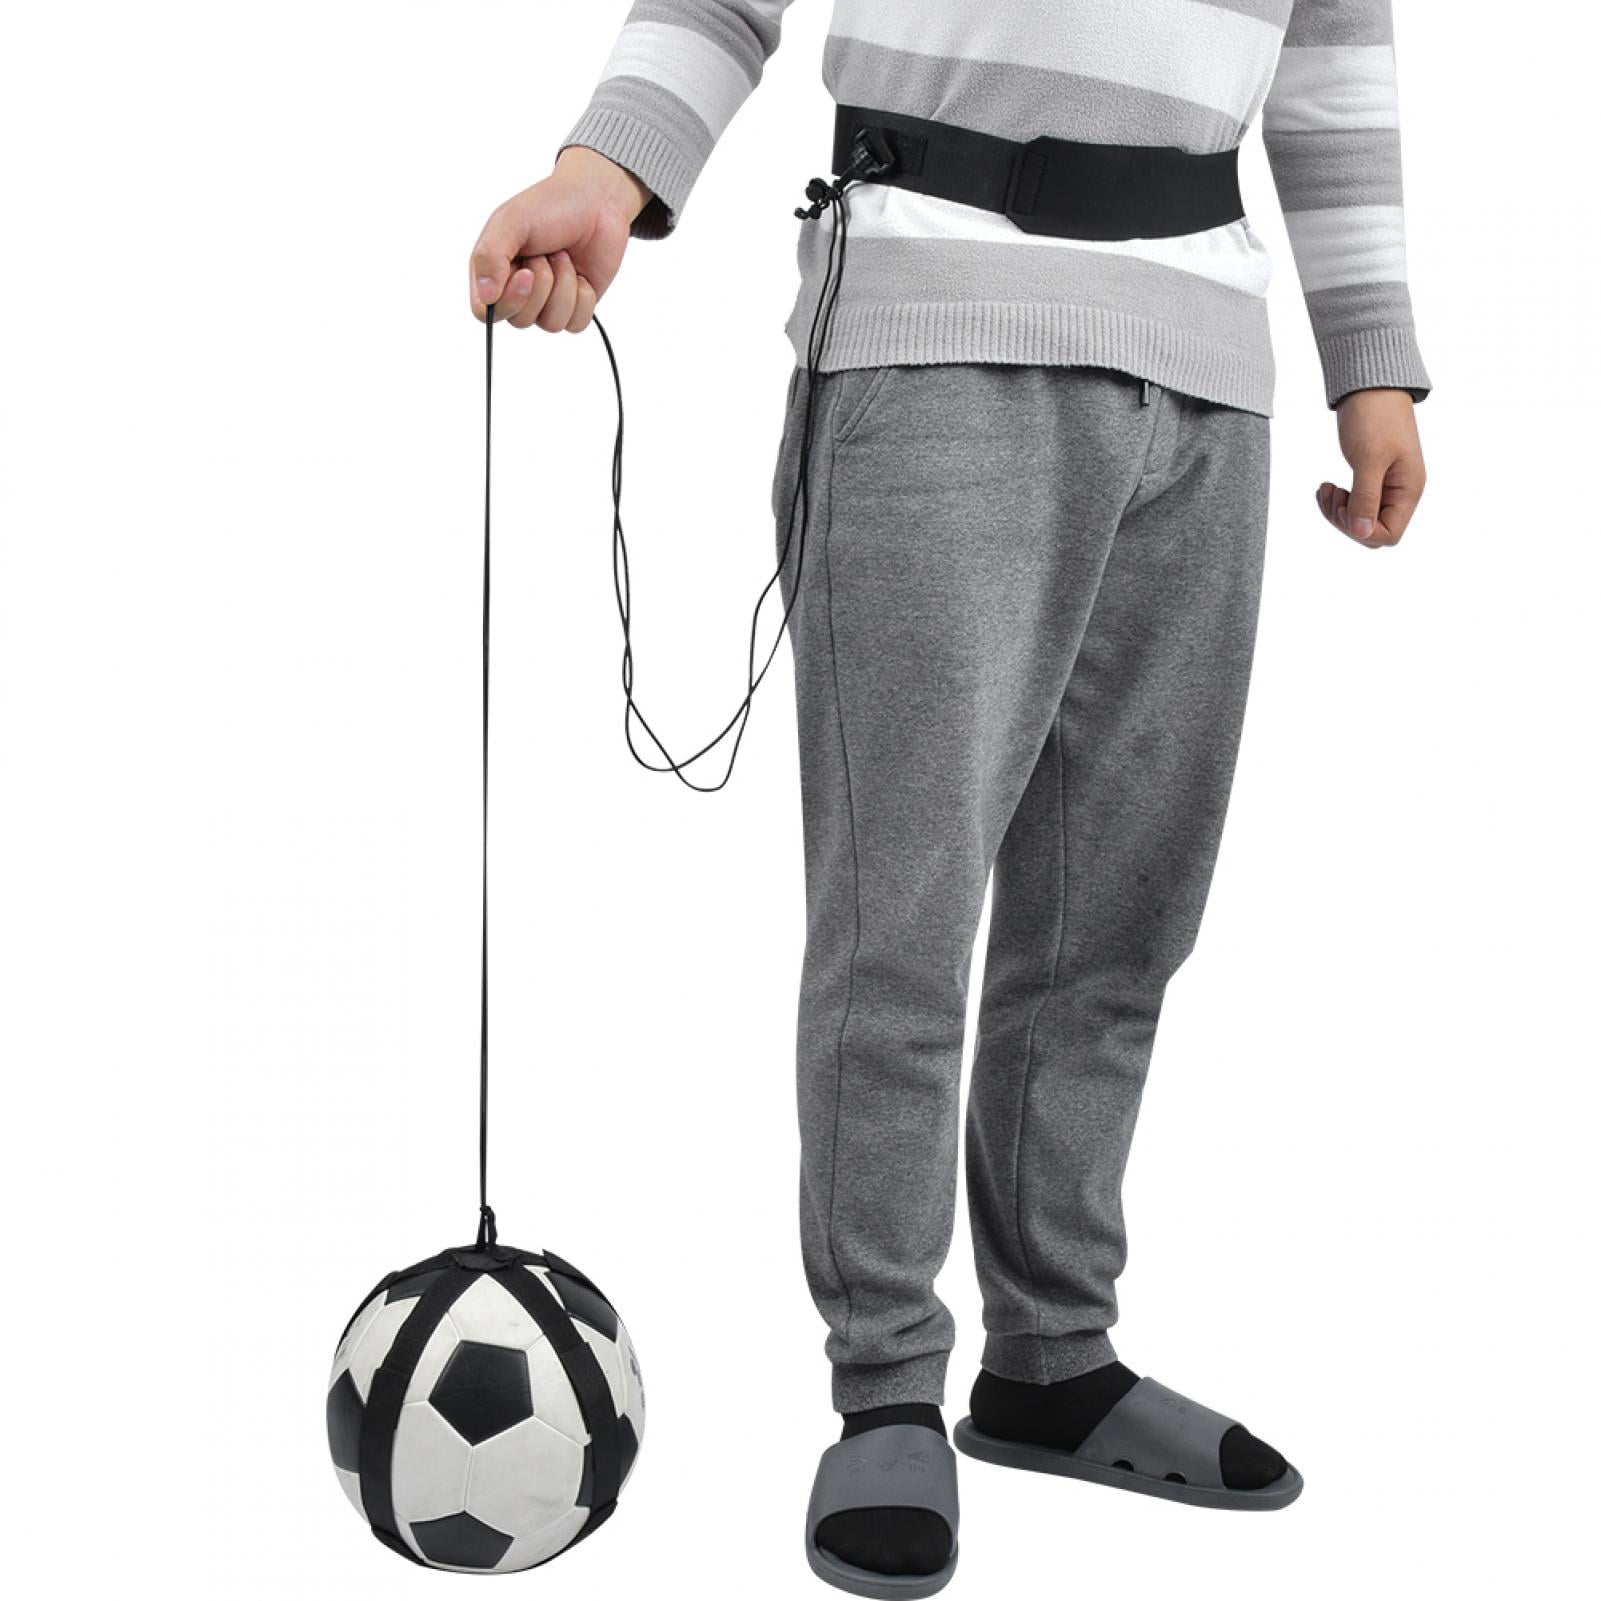 Details about   Neoprene Indoor Ball Training Set Waist Football Training Equipment Portable For 